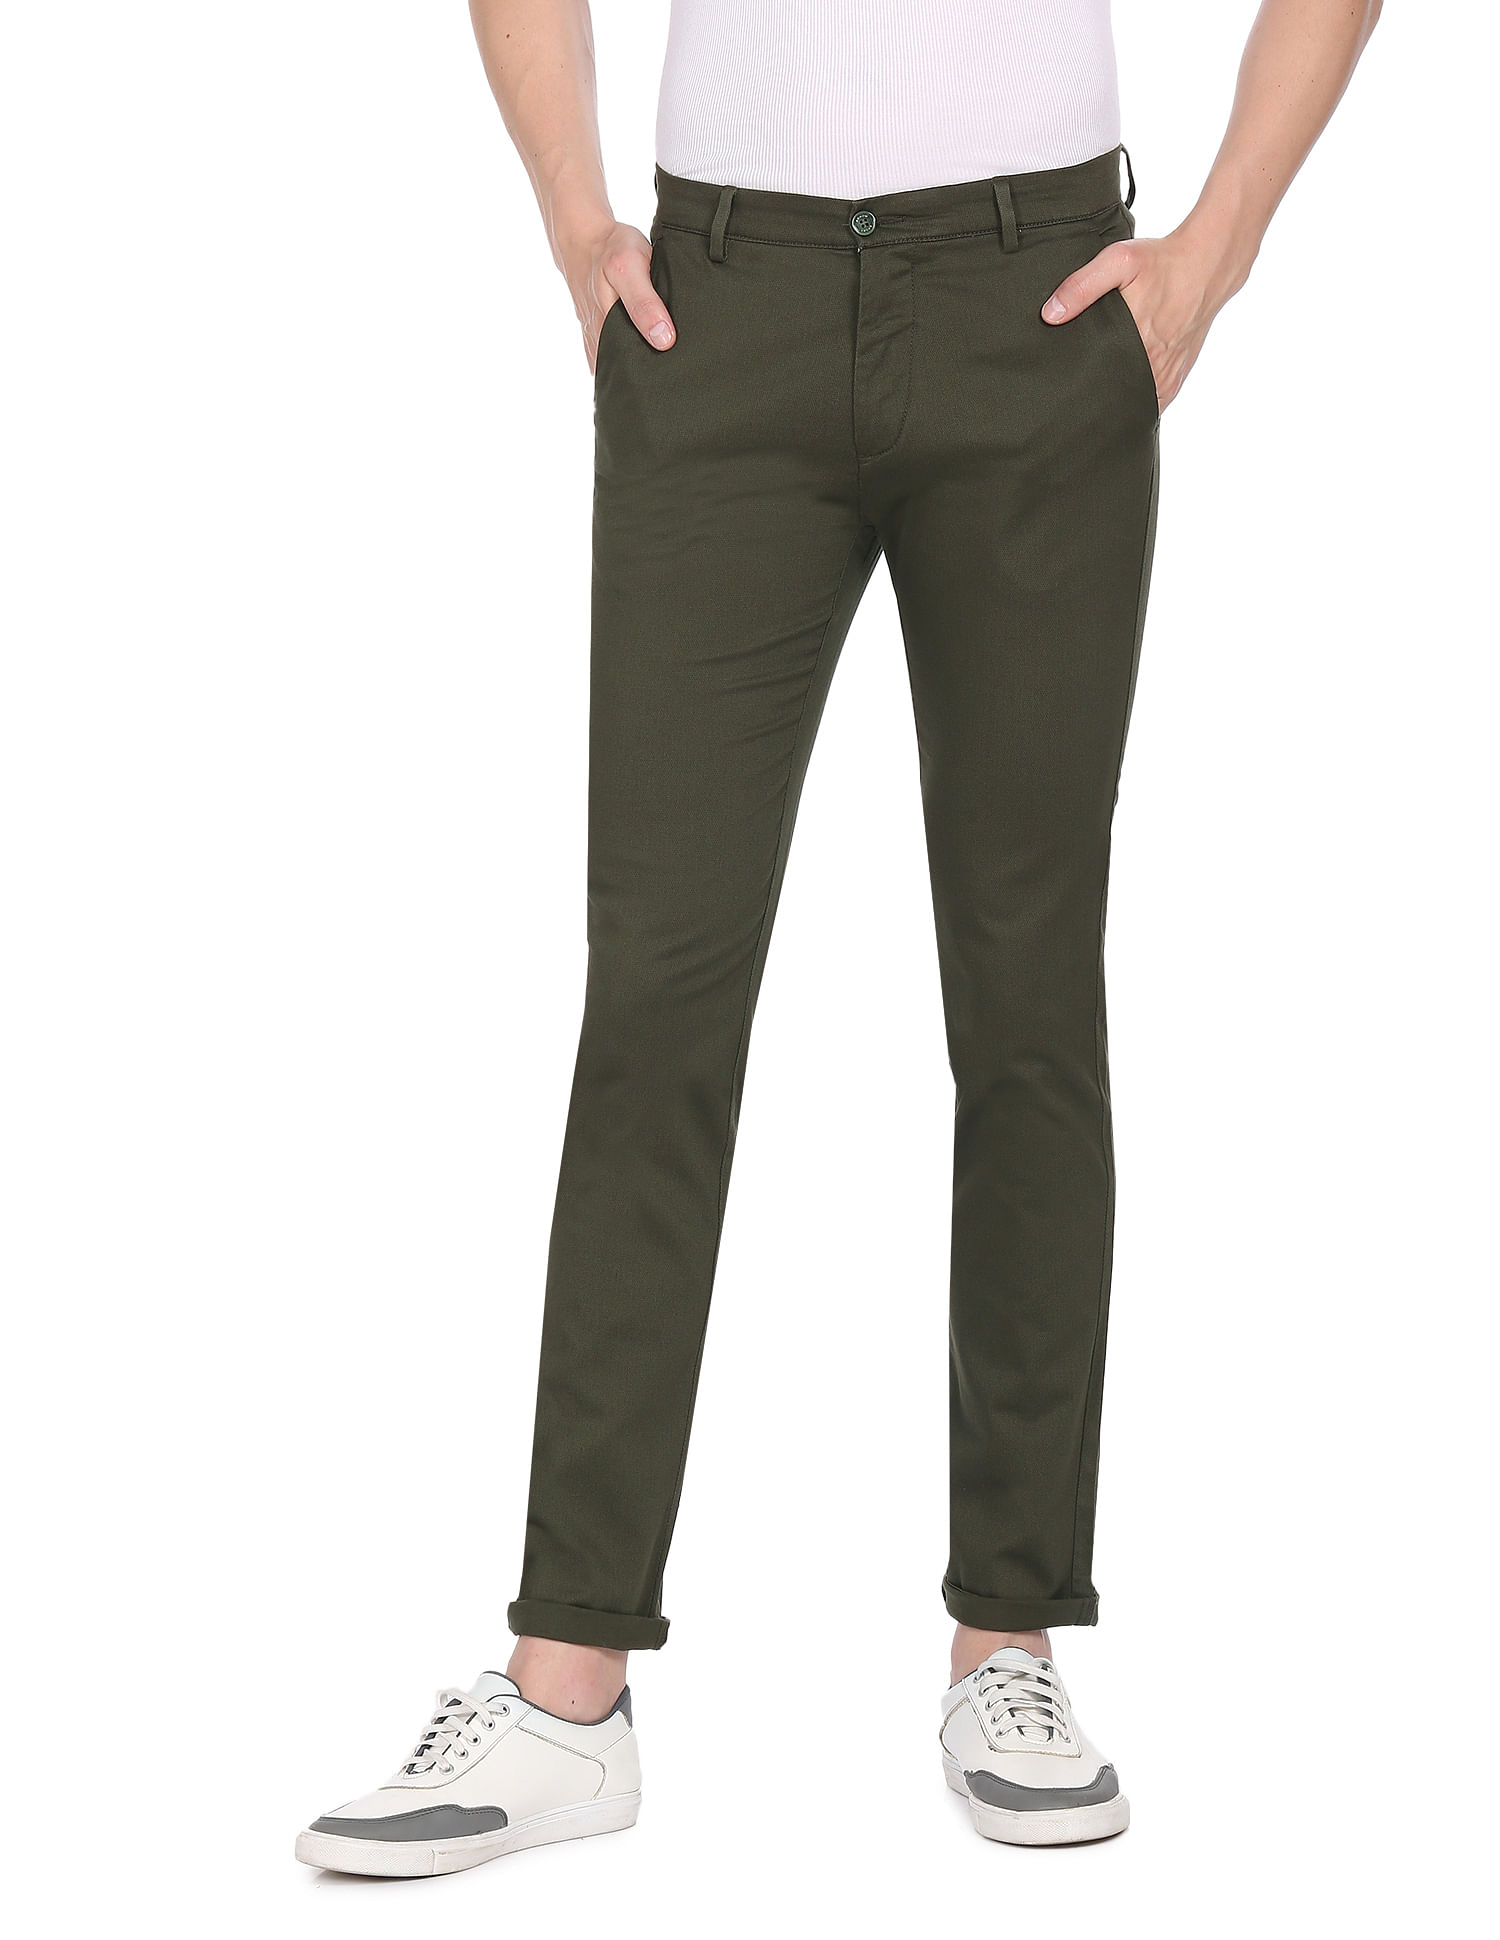 Aleida Lightweight Tri Pants Olive Green | ALLSAINTS US